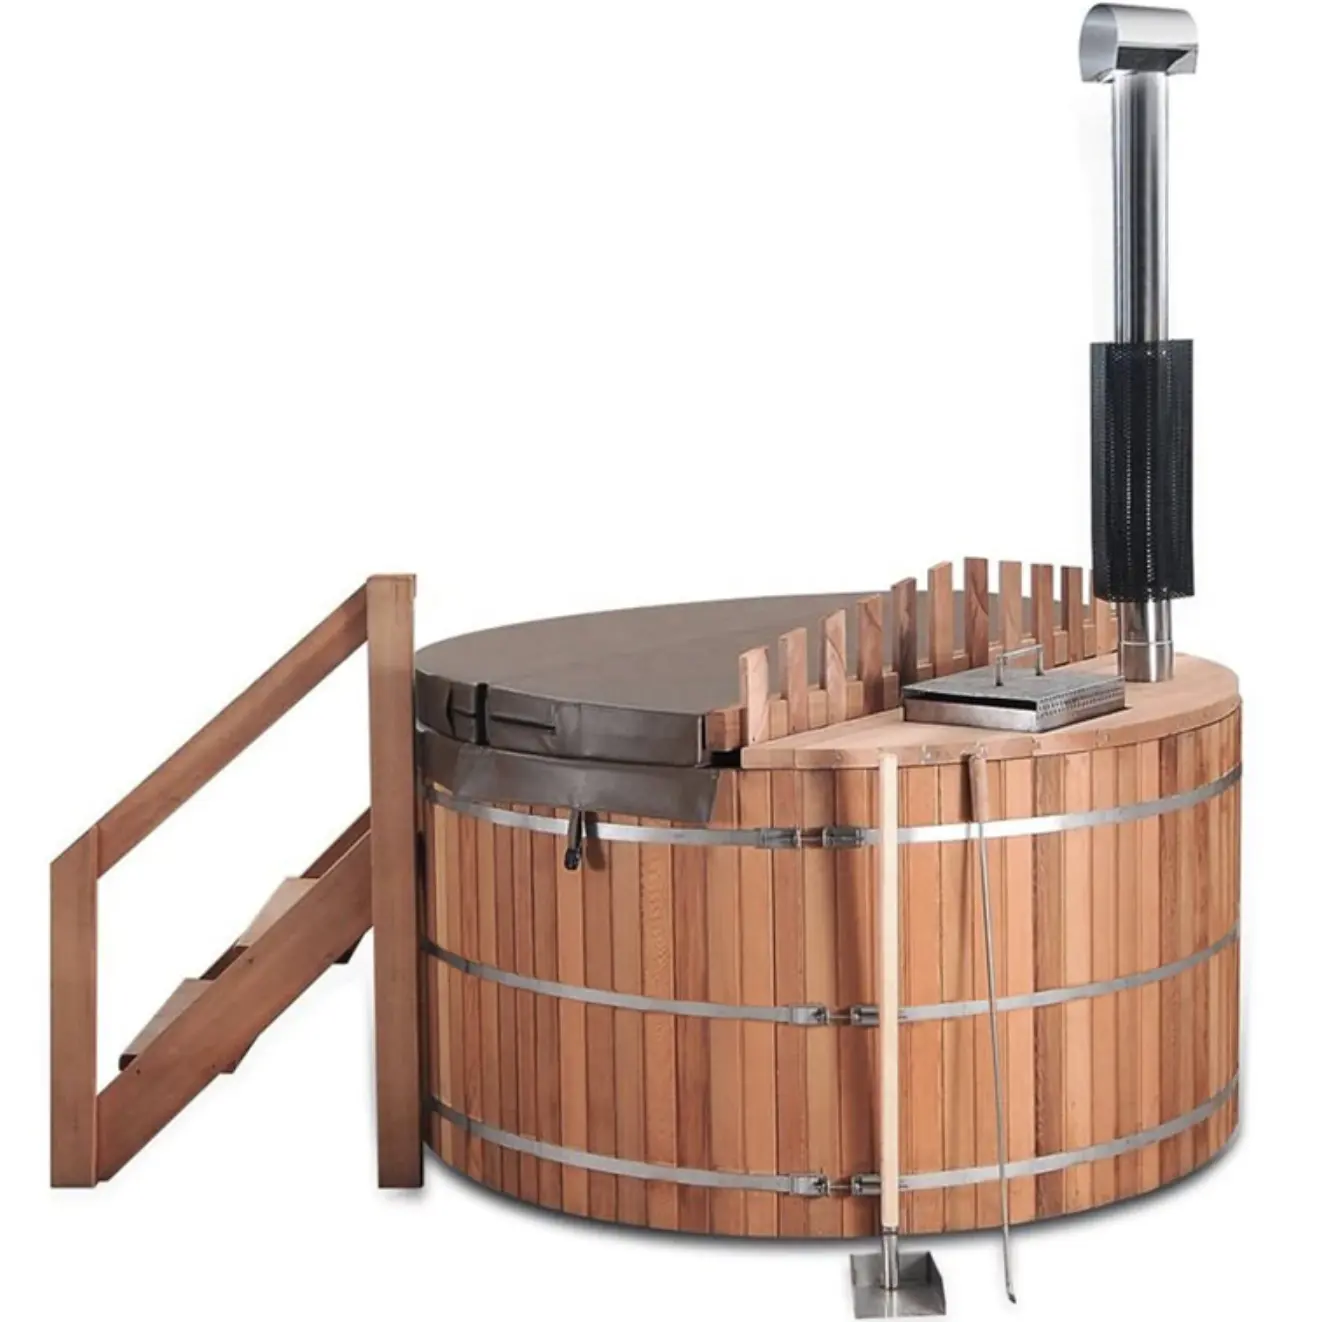 Calentador de madera personalizado para bañera de hidromasaje, dispositivo portátil para Sauna